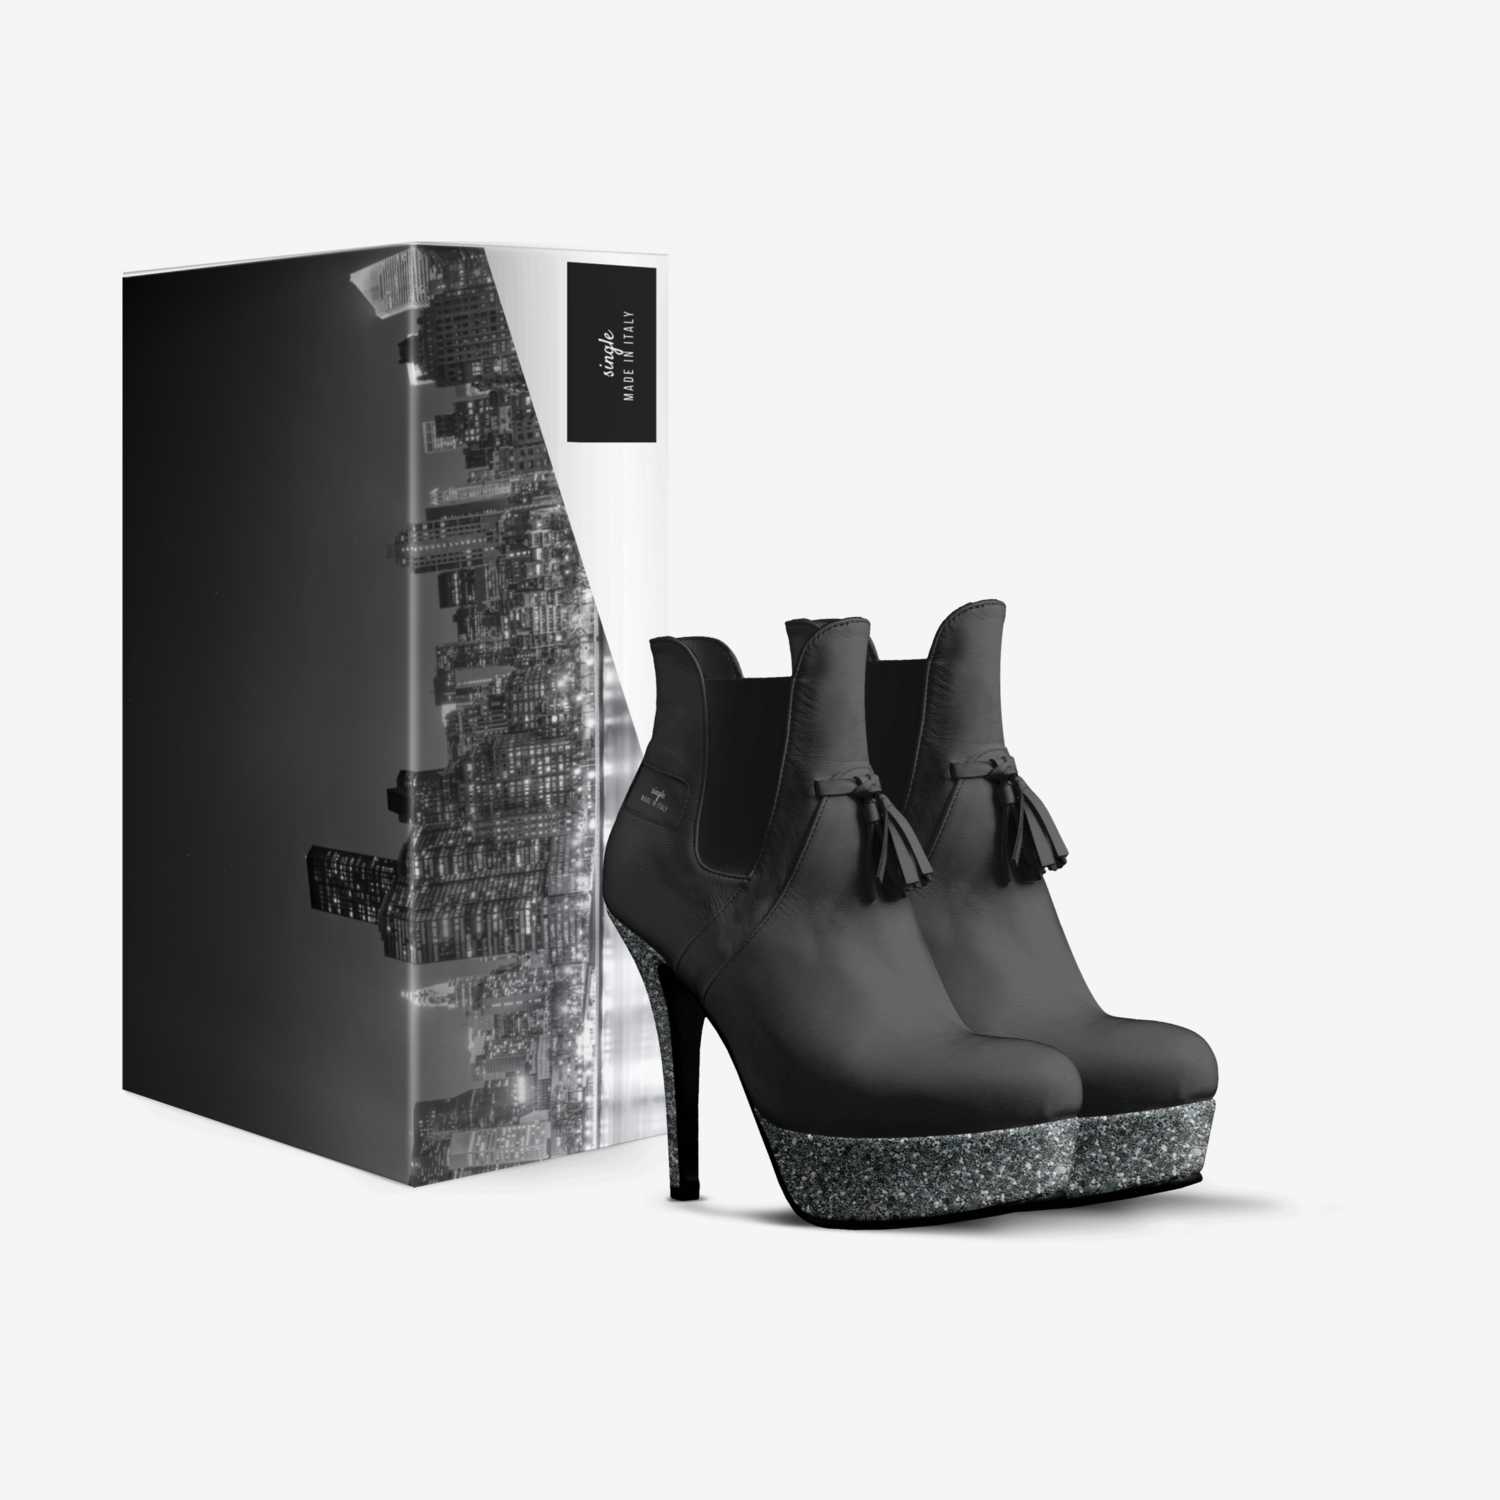 single custom made in Italy shoes by Moffatt Gordon | Box view